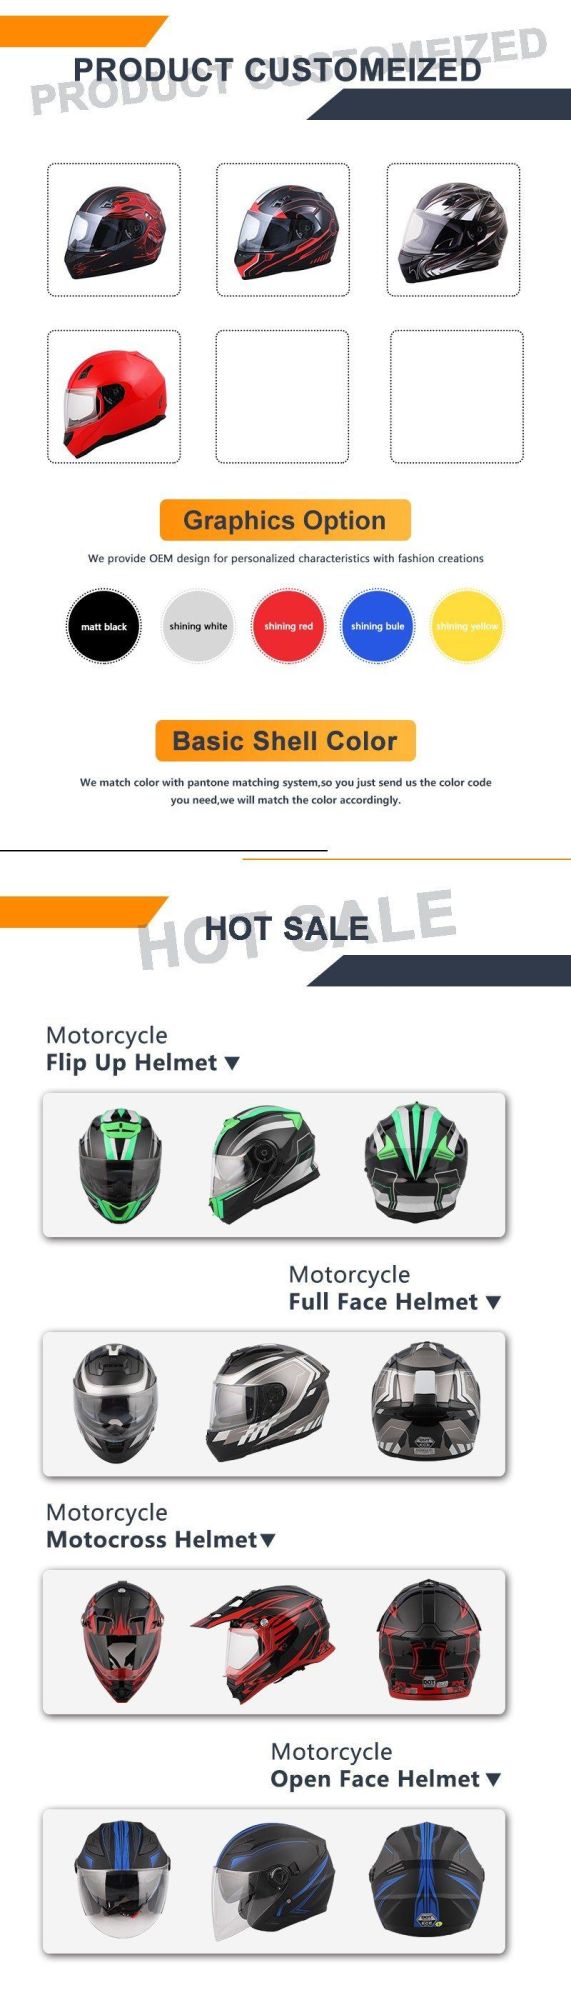 3/4 Open Face Classic Helmet with Hidden Visor High-Quality Advanced ABS